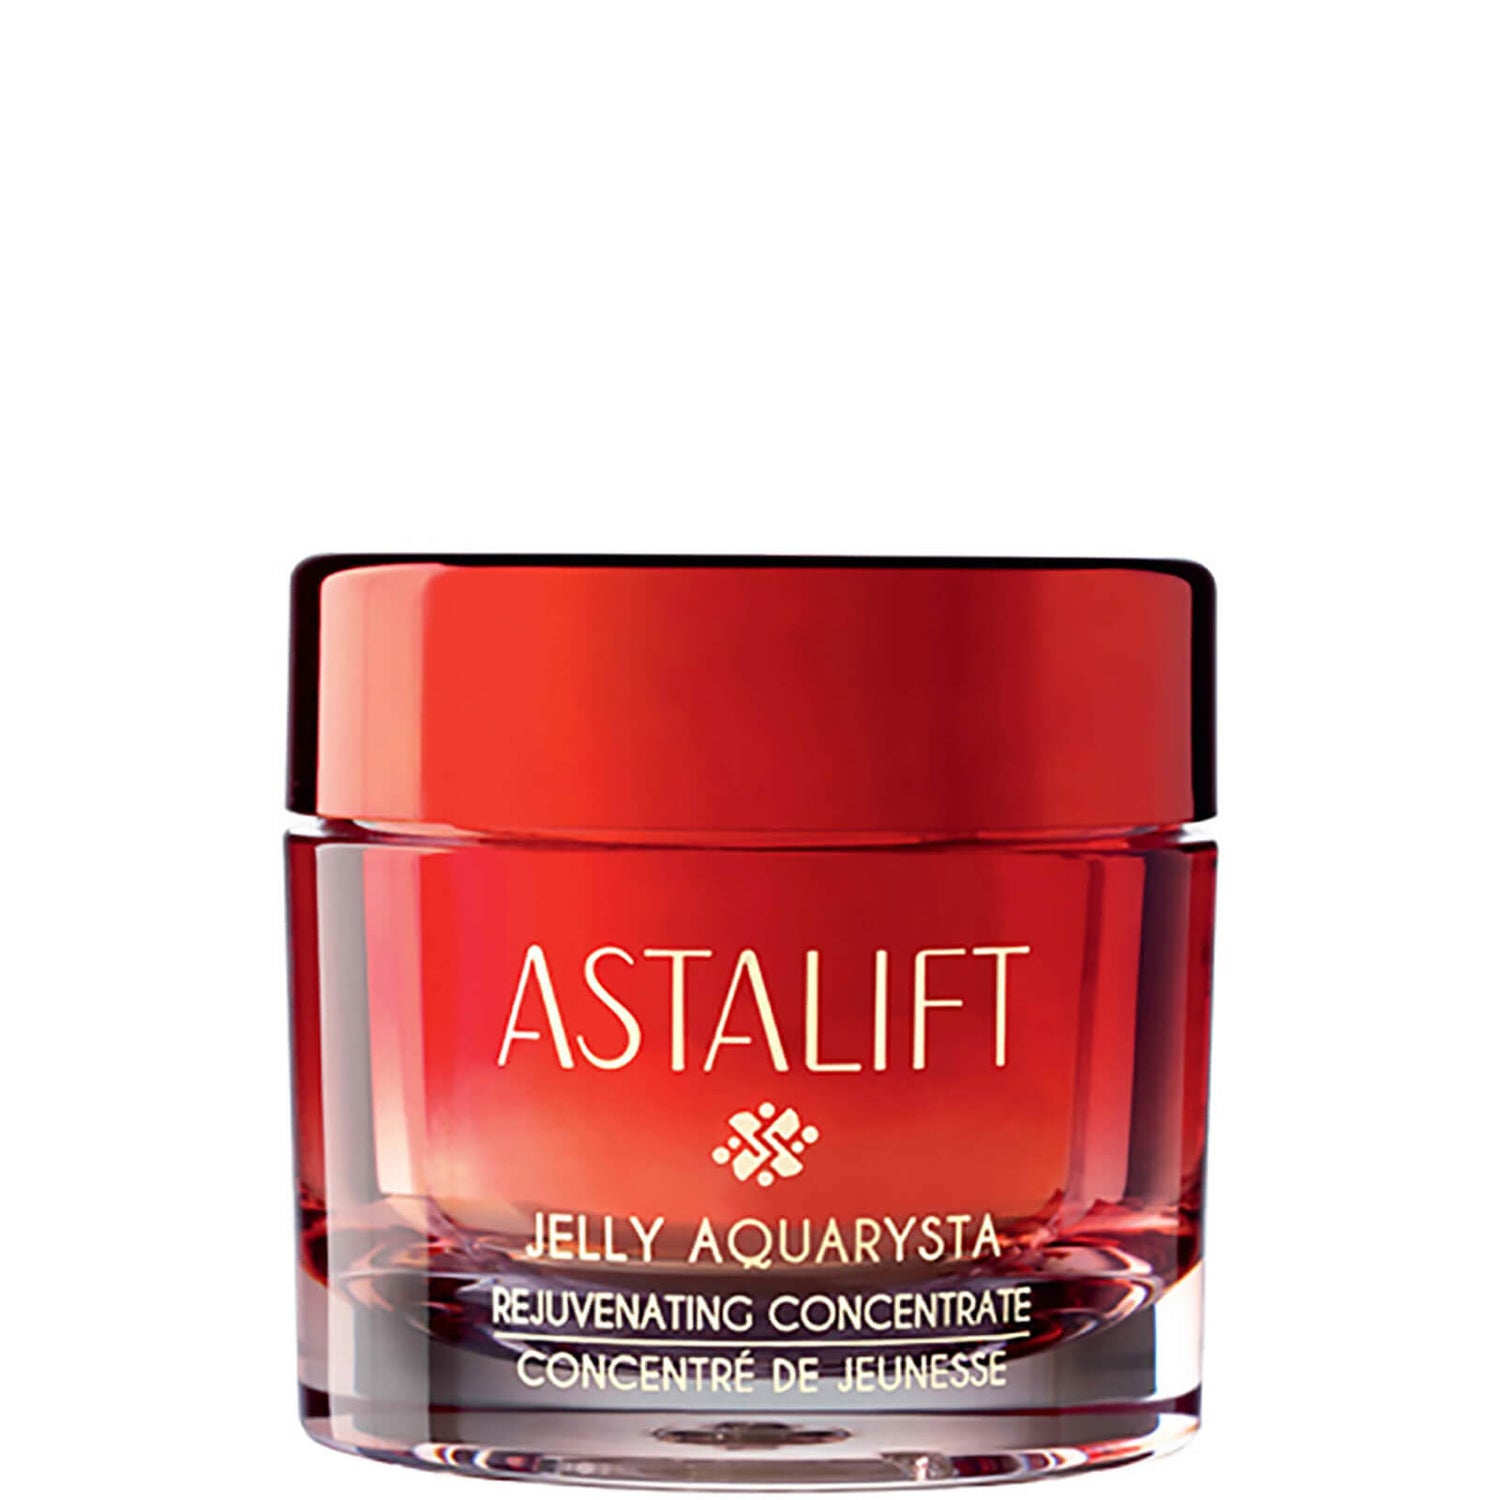 Astalift Jelly Aquarysta Rejuvenating Concentrate 15g